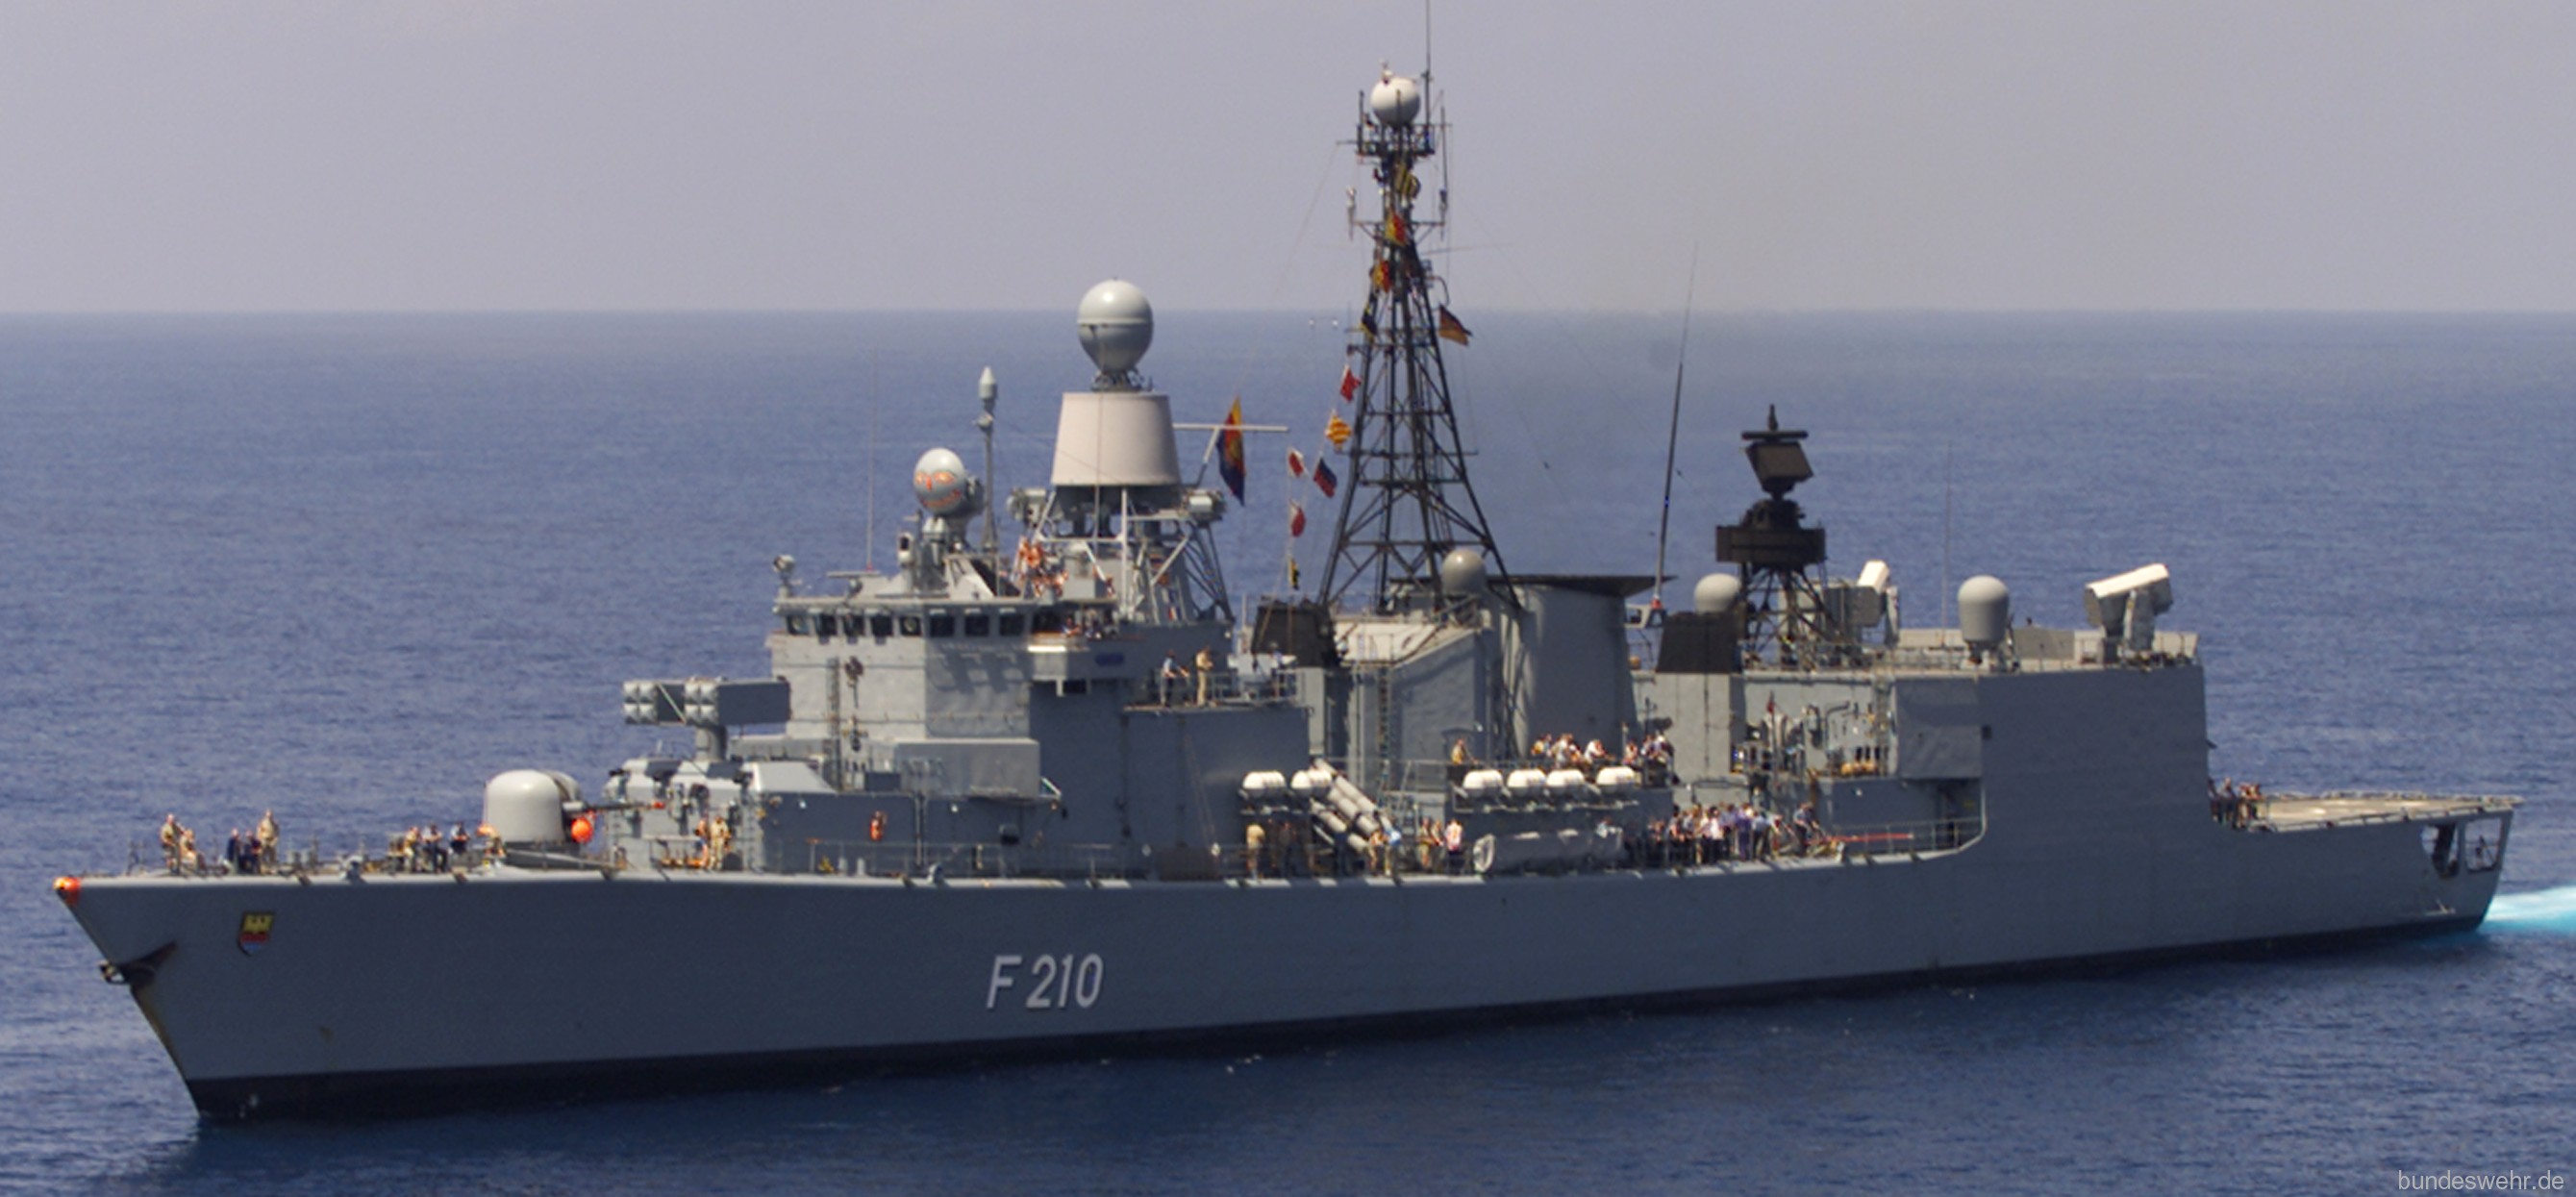 f-210 fgs emden type 122 bremen class frigate german navy 04